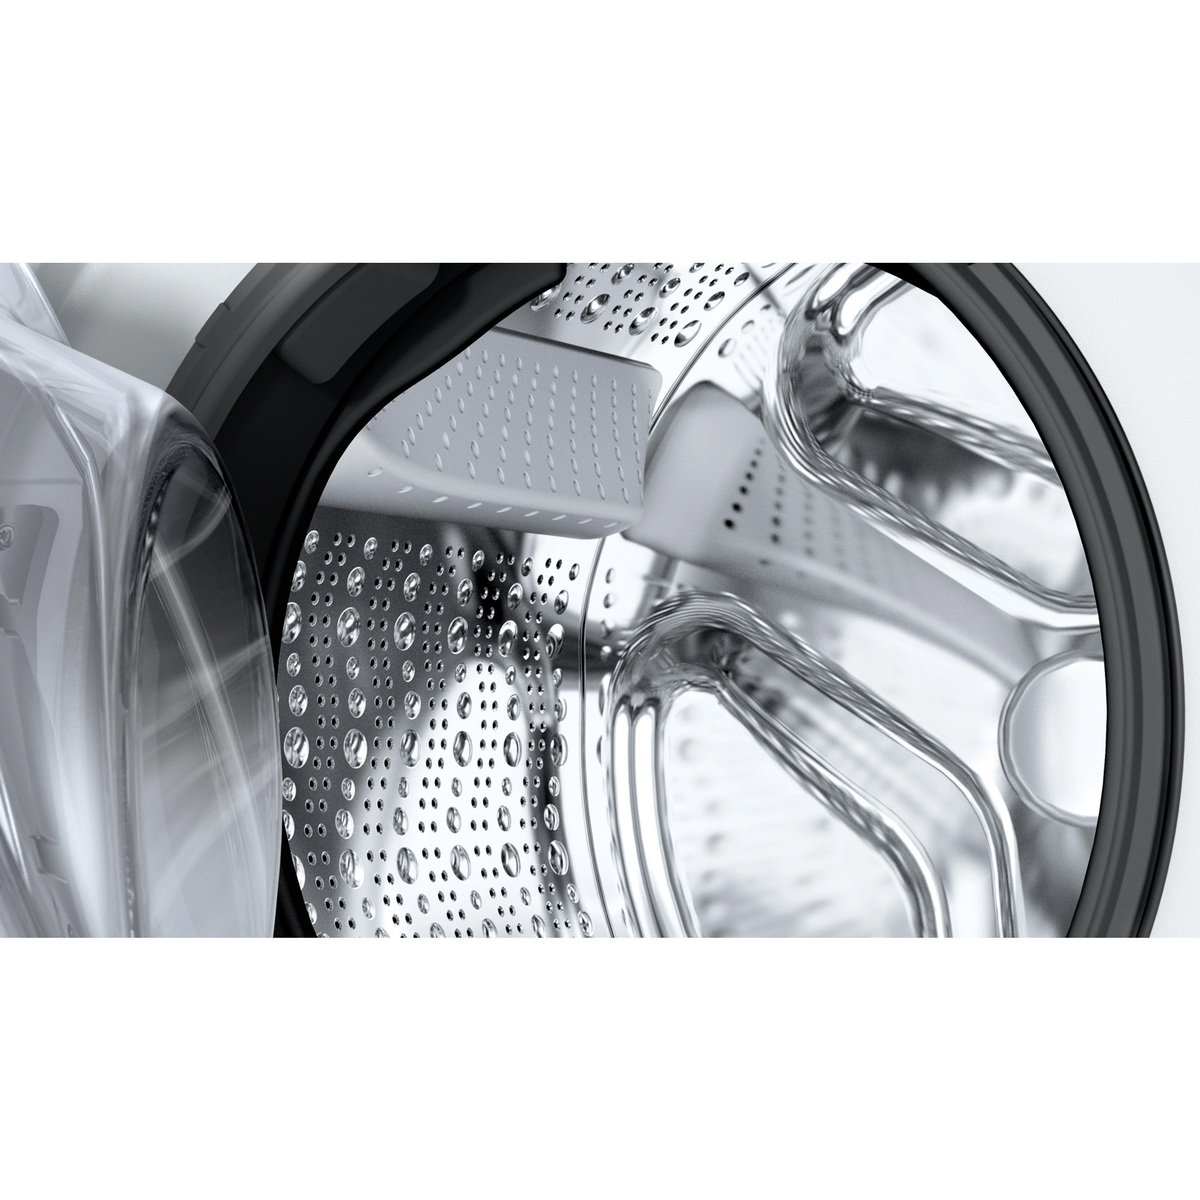 Siemens iQ500 Front Load Washing Machine, 9 kg, 1400 RPM, White, WG44A2A0GC